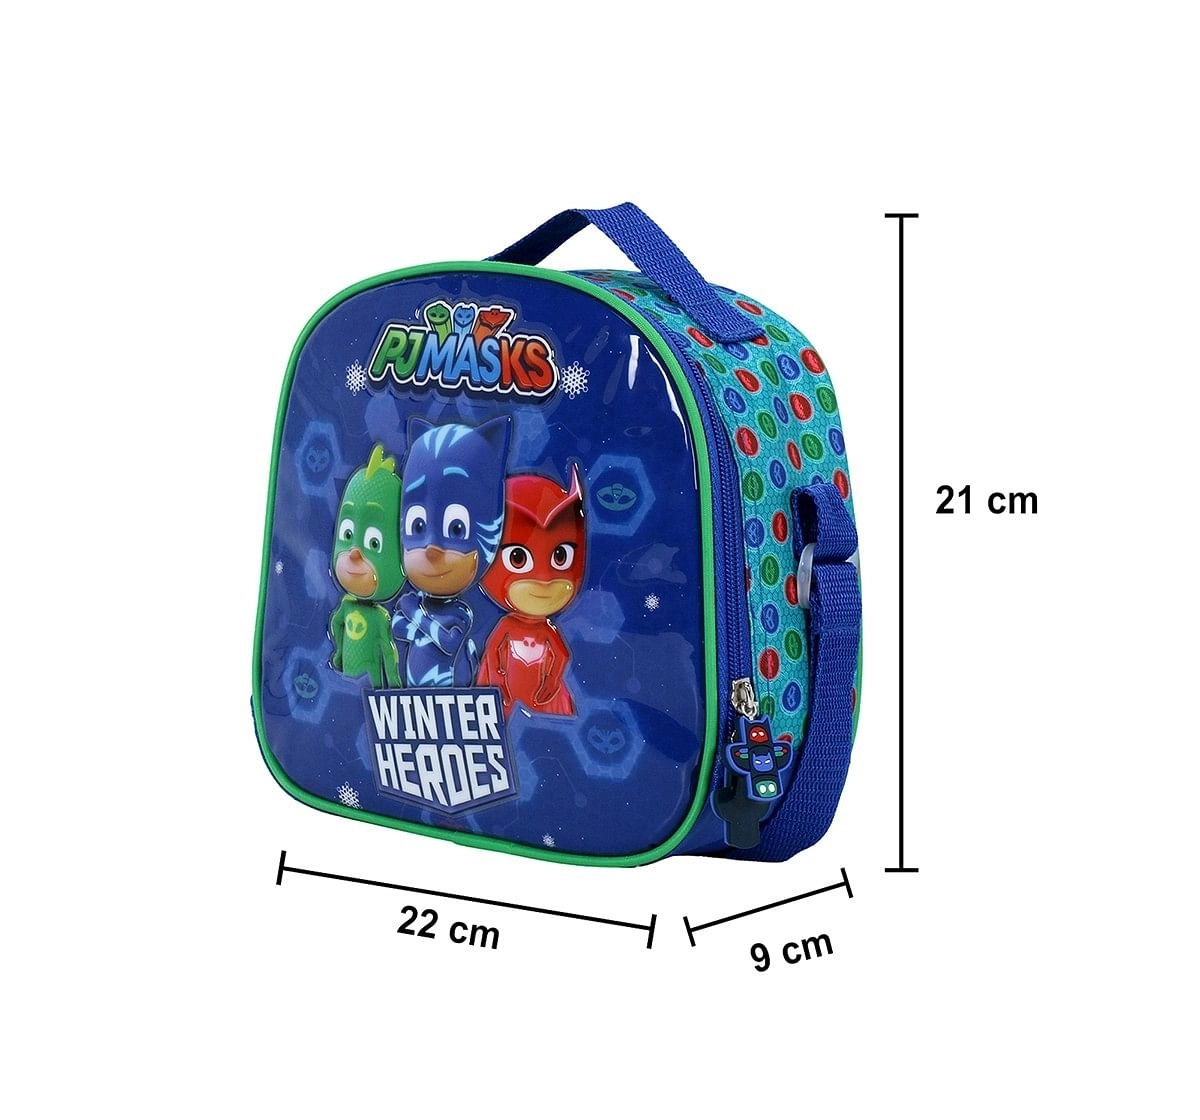 Pj Mask Winter Heroes Lunch Bag Bags for Kids age 3Y+ 